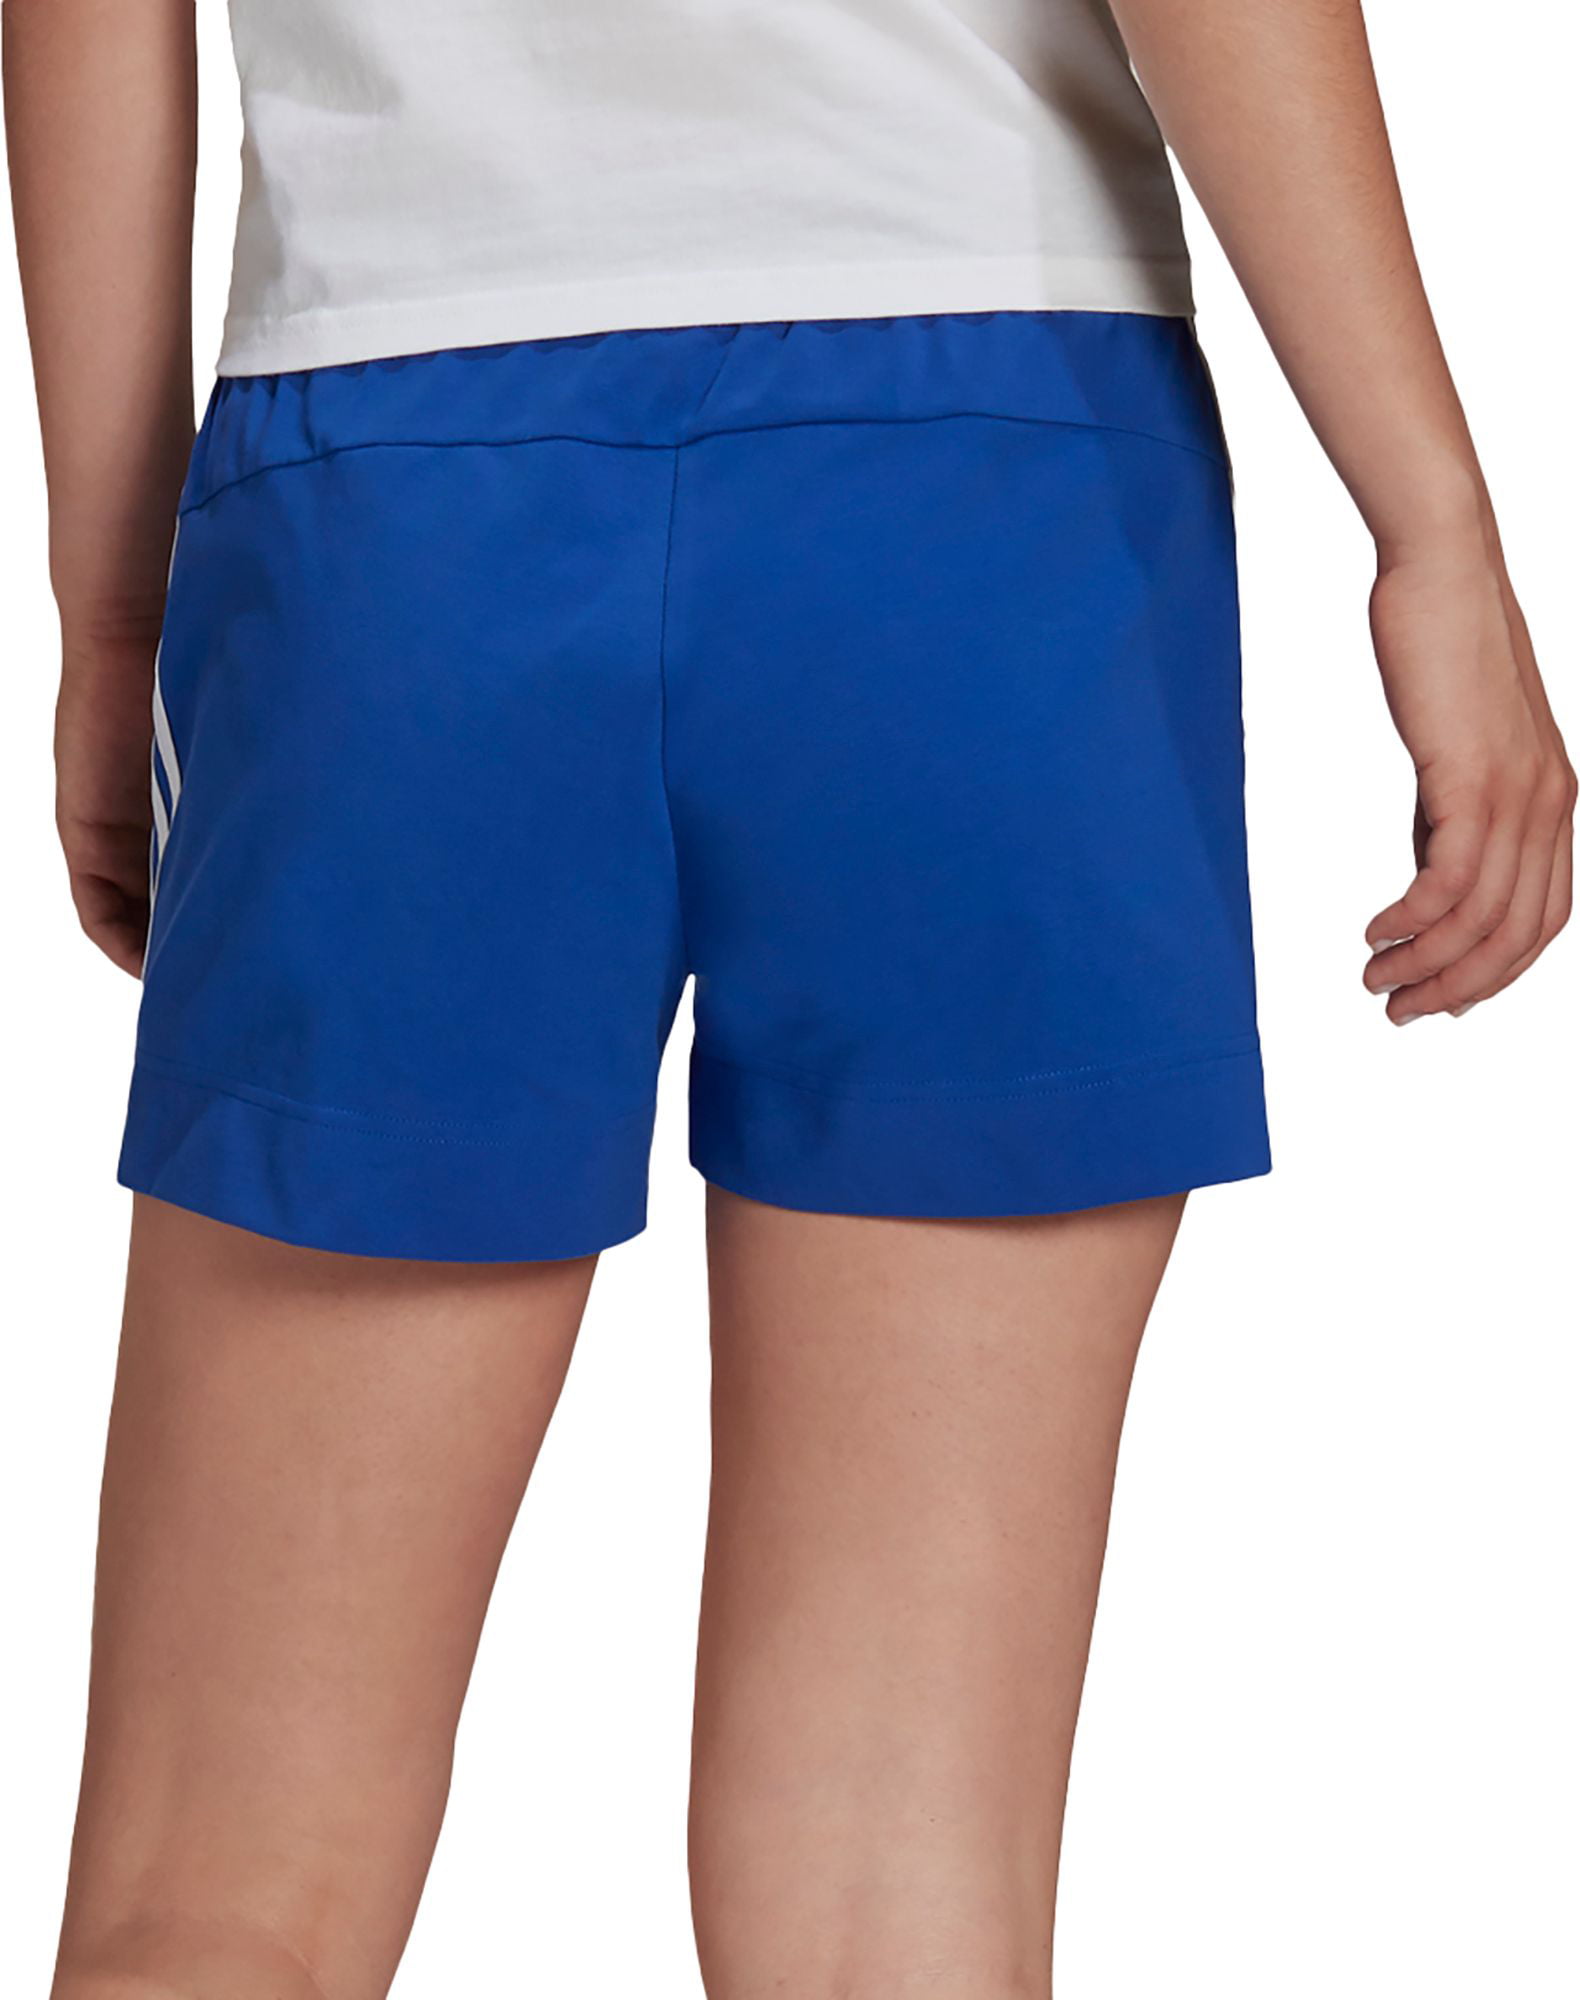 adidas Women's Essentials Slim 3-Stripes Shorts, Bold Blue, S